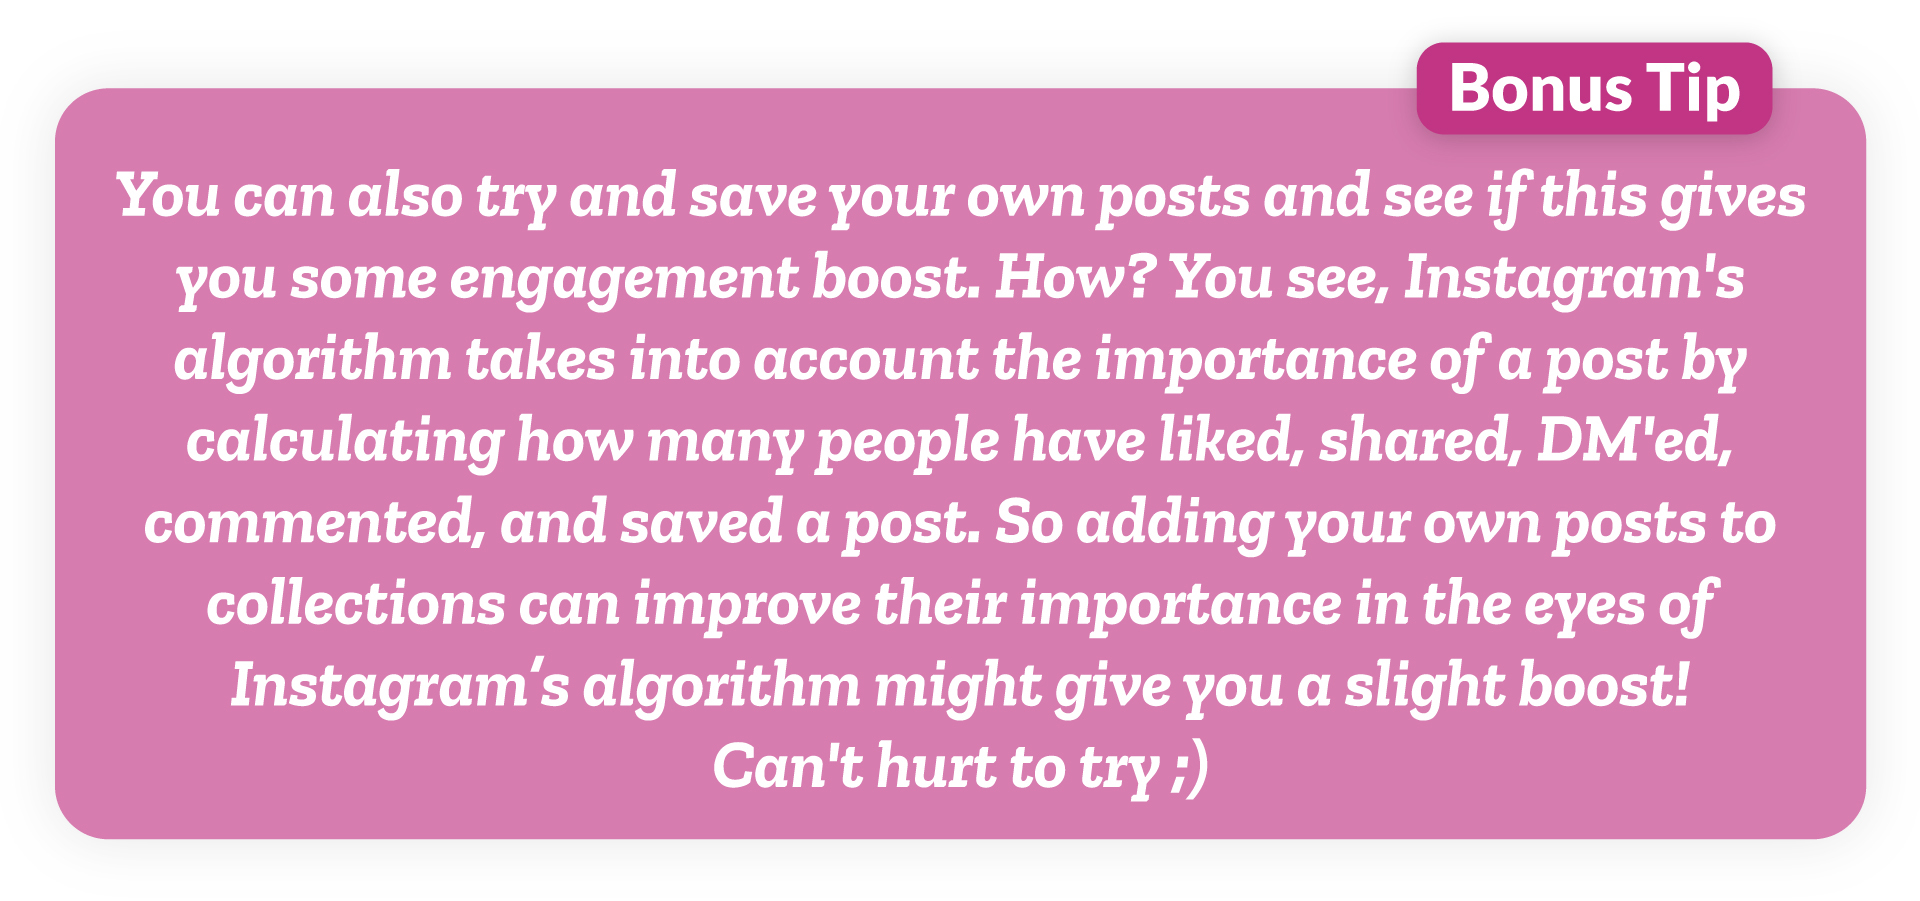 Bonus tip banner on bookmarking instagram's posts